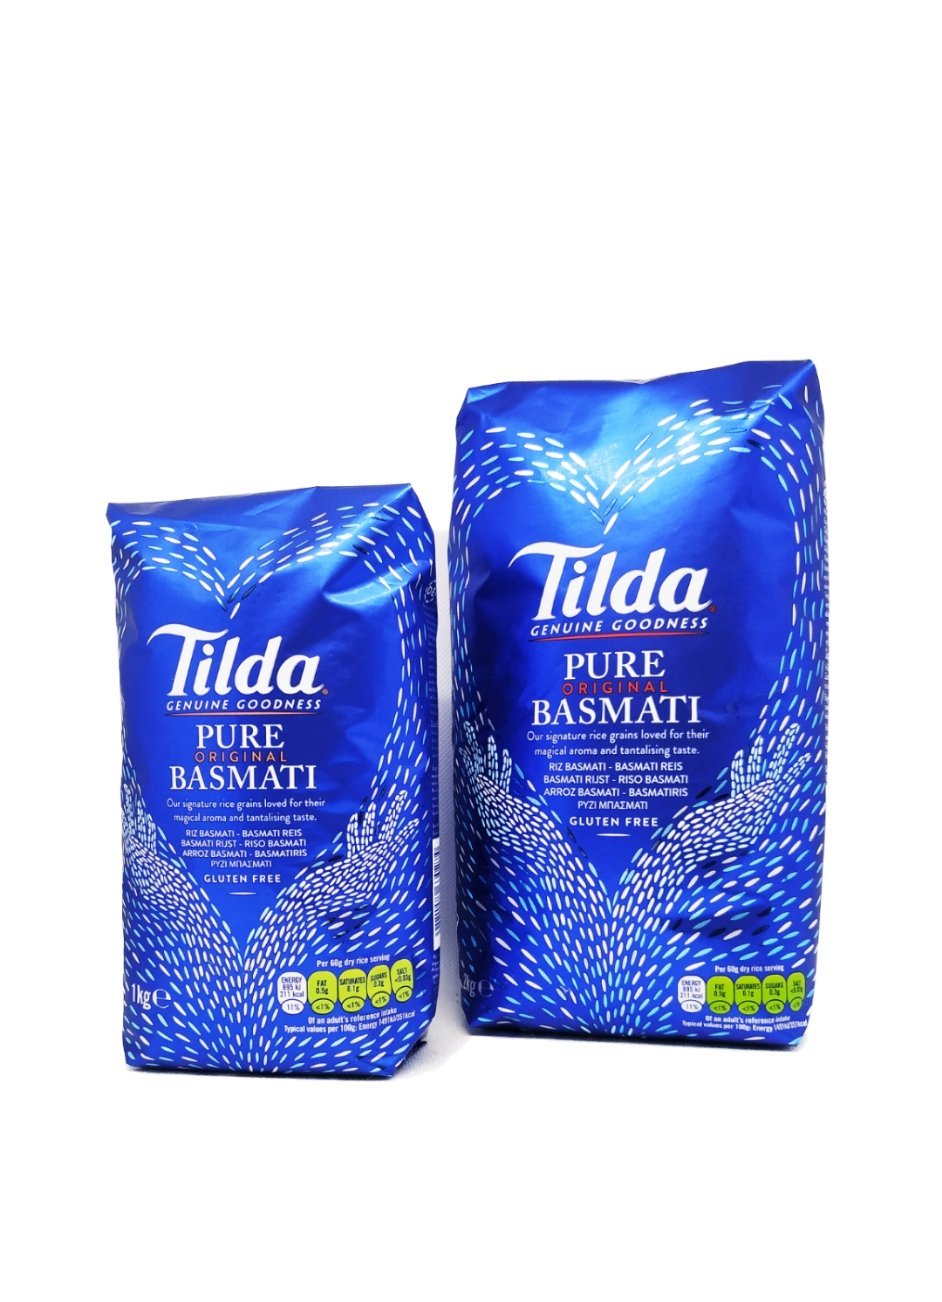 Produits orientaux en ligne : Tilda genuine goodness - Pure original basmati 